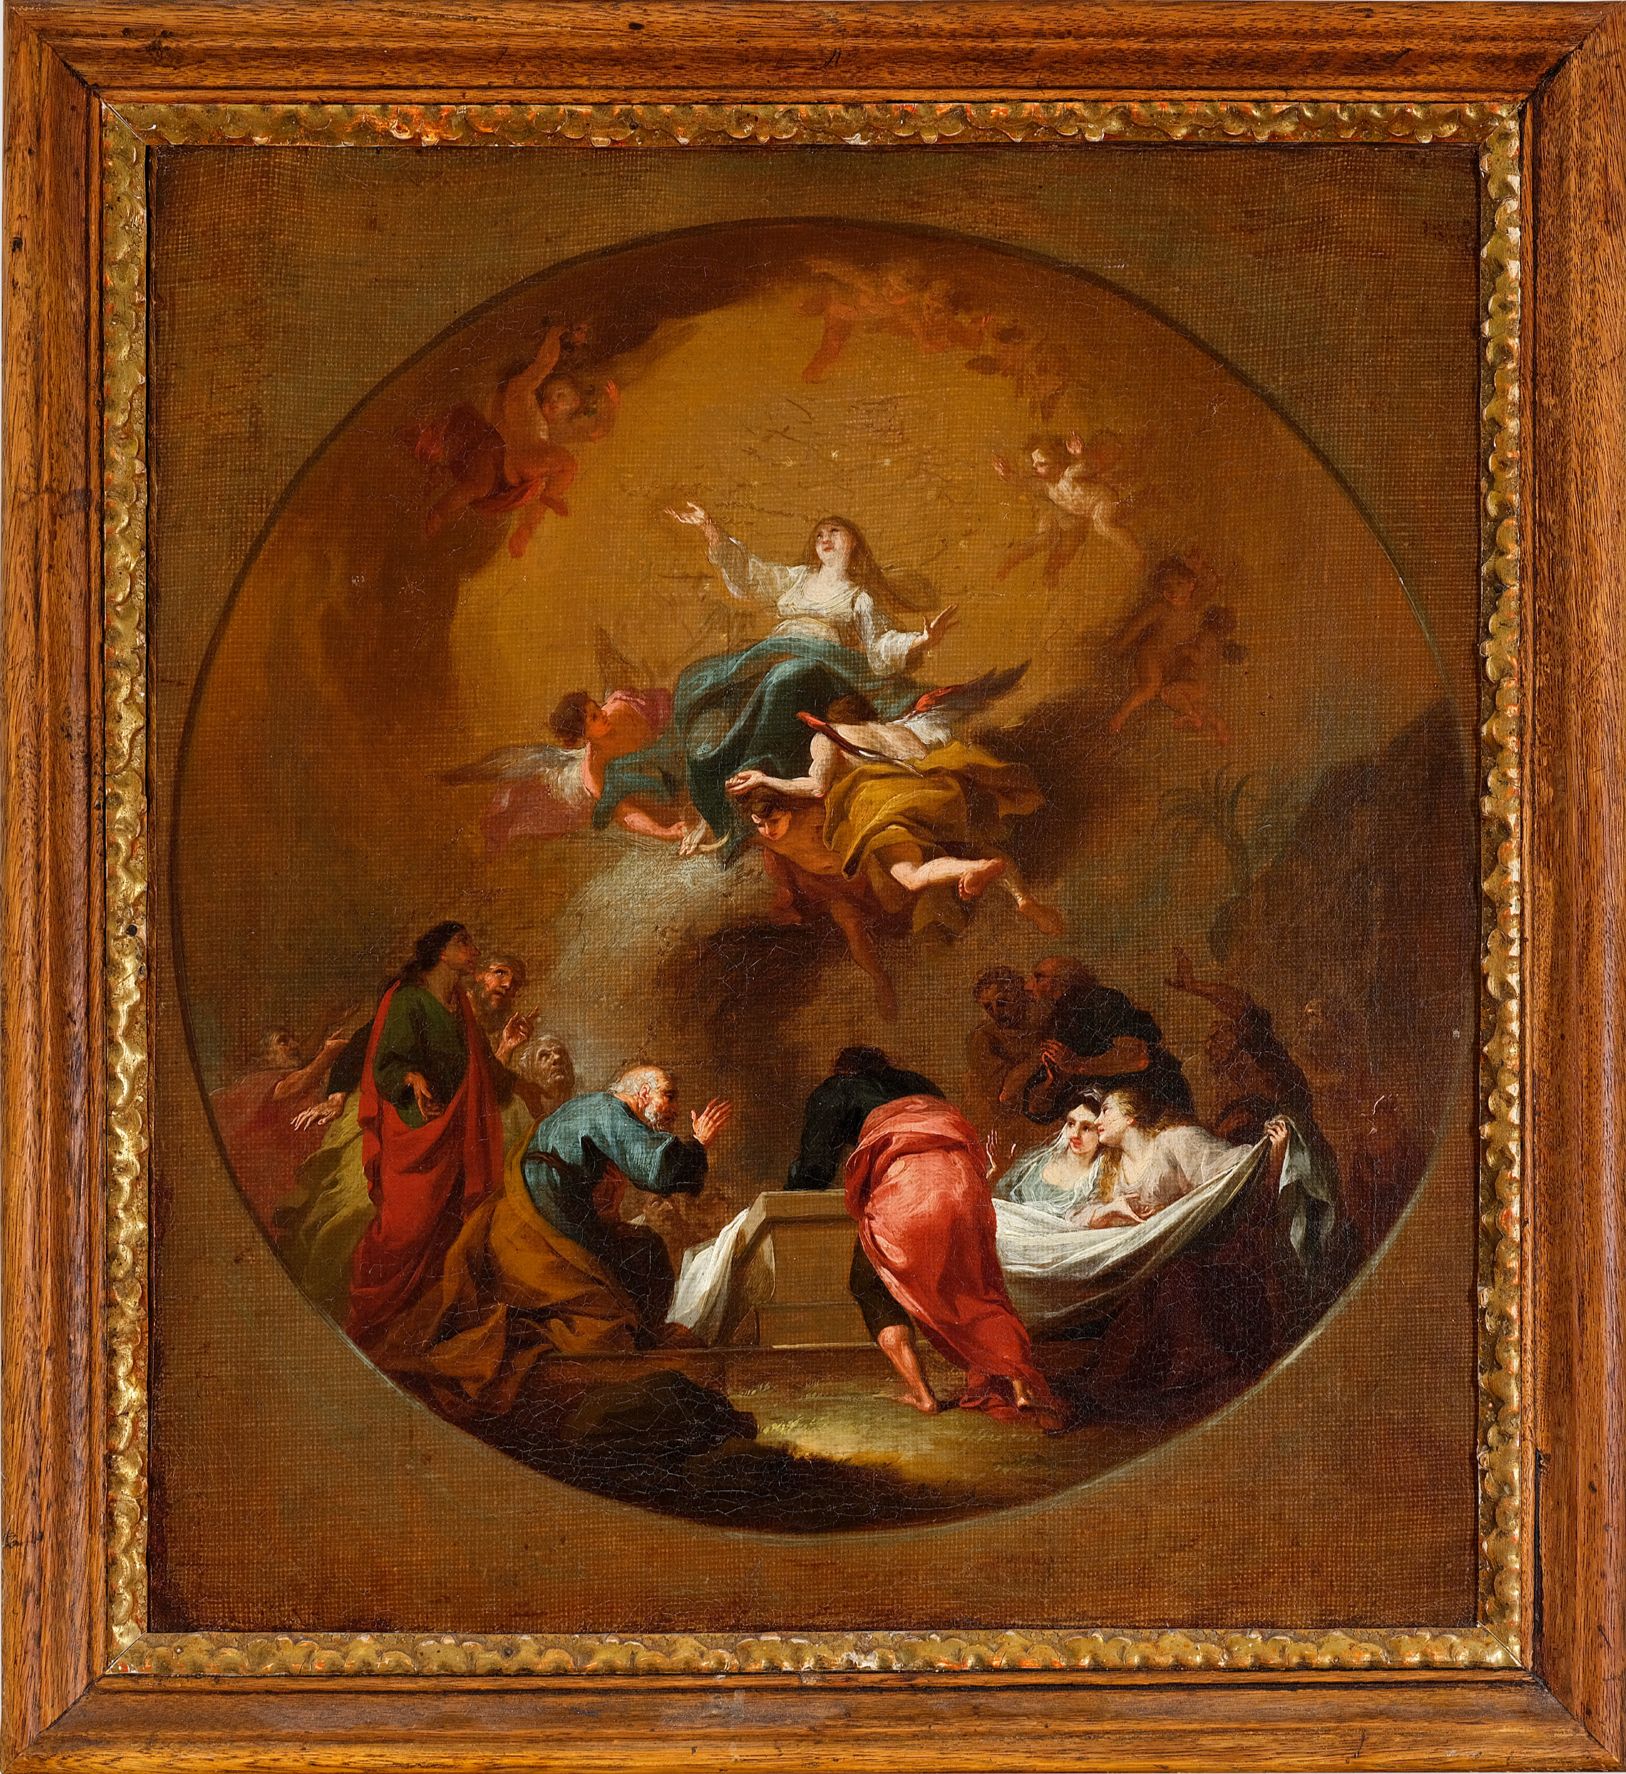 Null 博泽托


圣母升天


奥地利或南德


18世纪中叶


布面油画，重涂


46,5 x 41,5厘米





在画面的圆形部分，我们看到了玛&hellip;